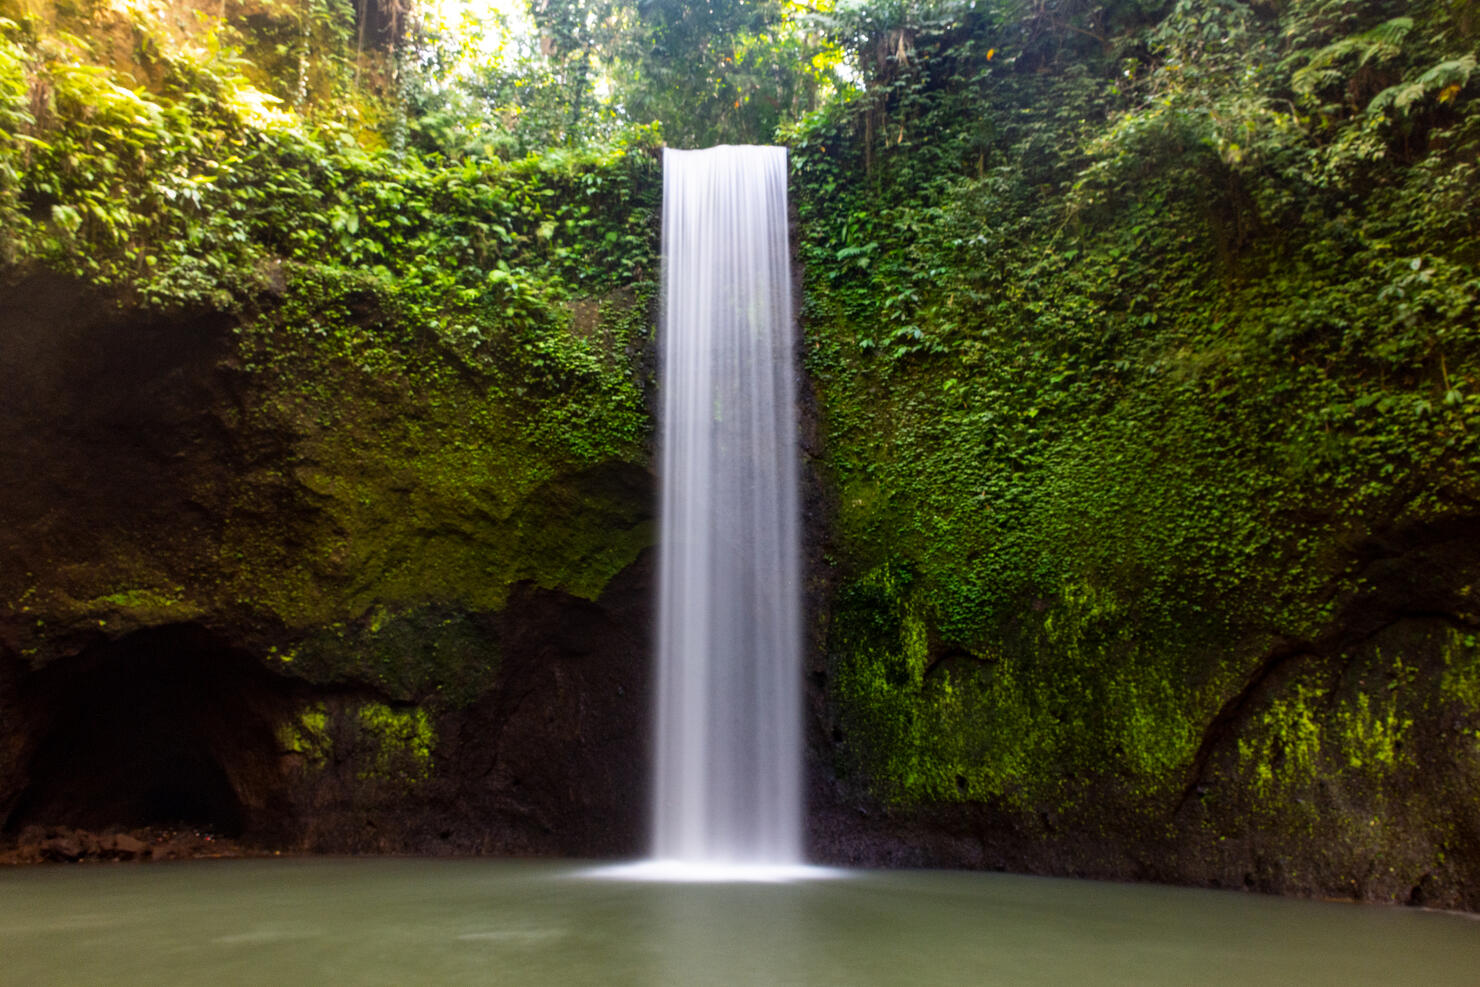 The Tibumana Waterfall near Ubud in Bali